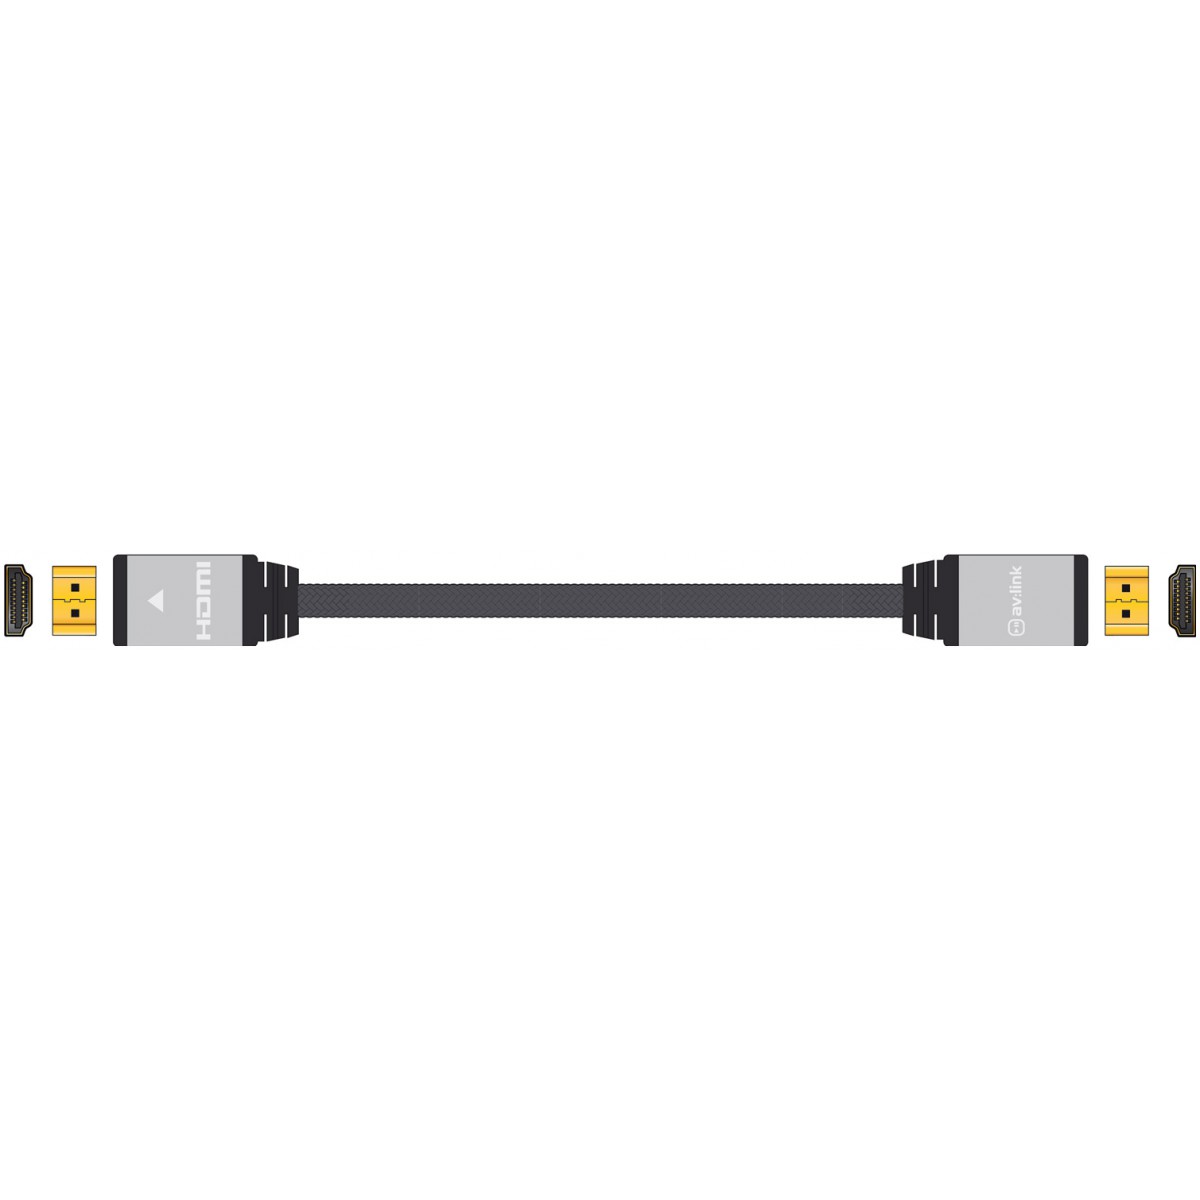 Fotografie AV:Link Prémiový HDMI kabel s podporou 4K, 1,5m